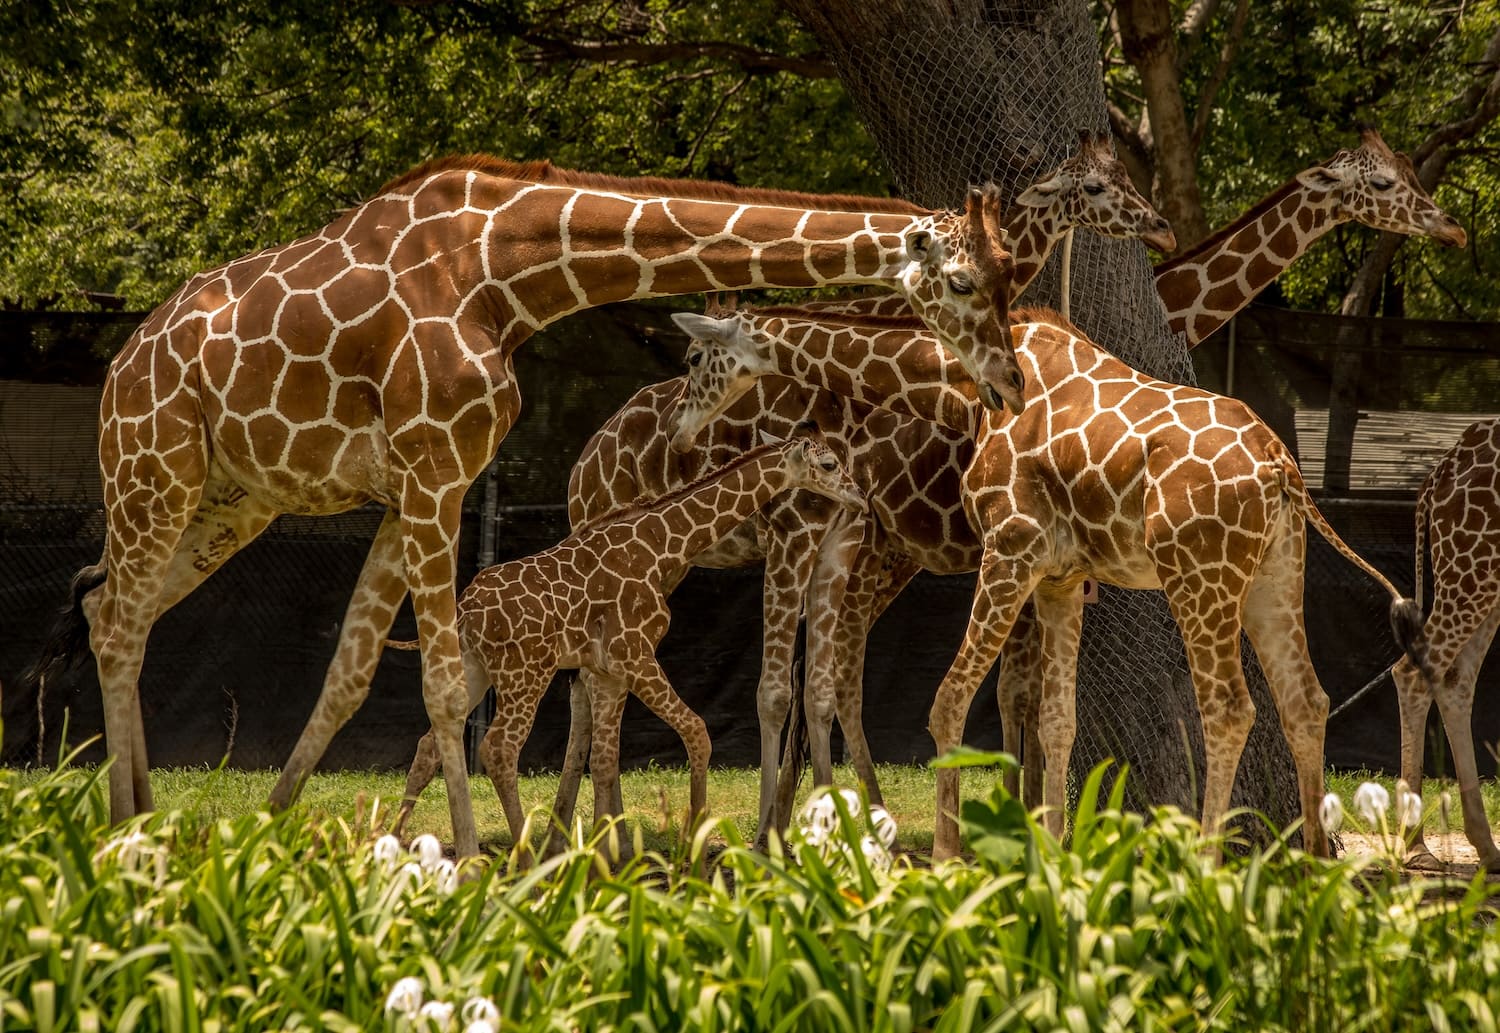 Fort Worth Zoo Giraffes